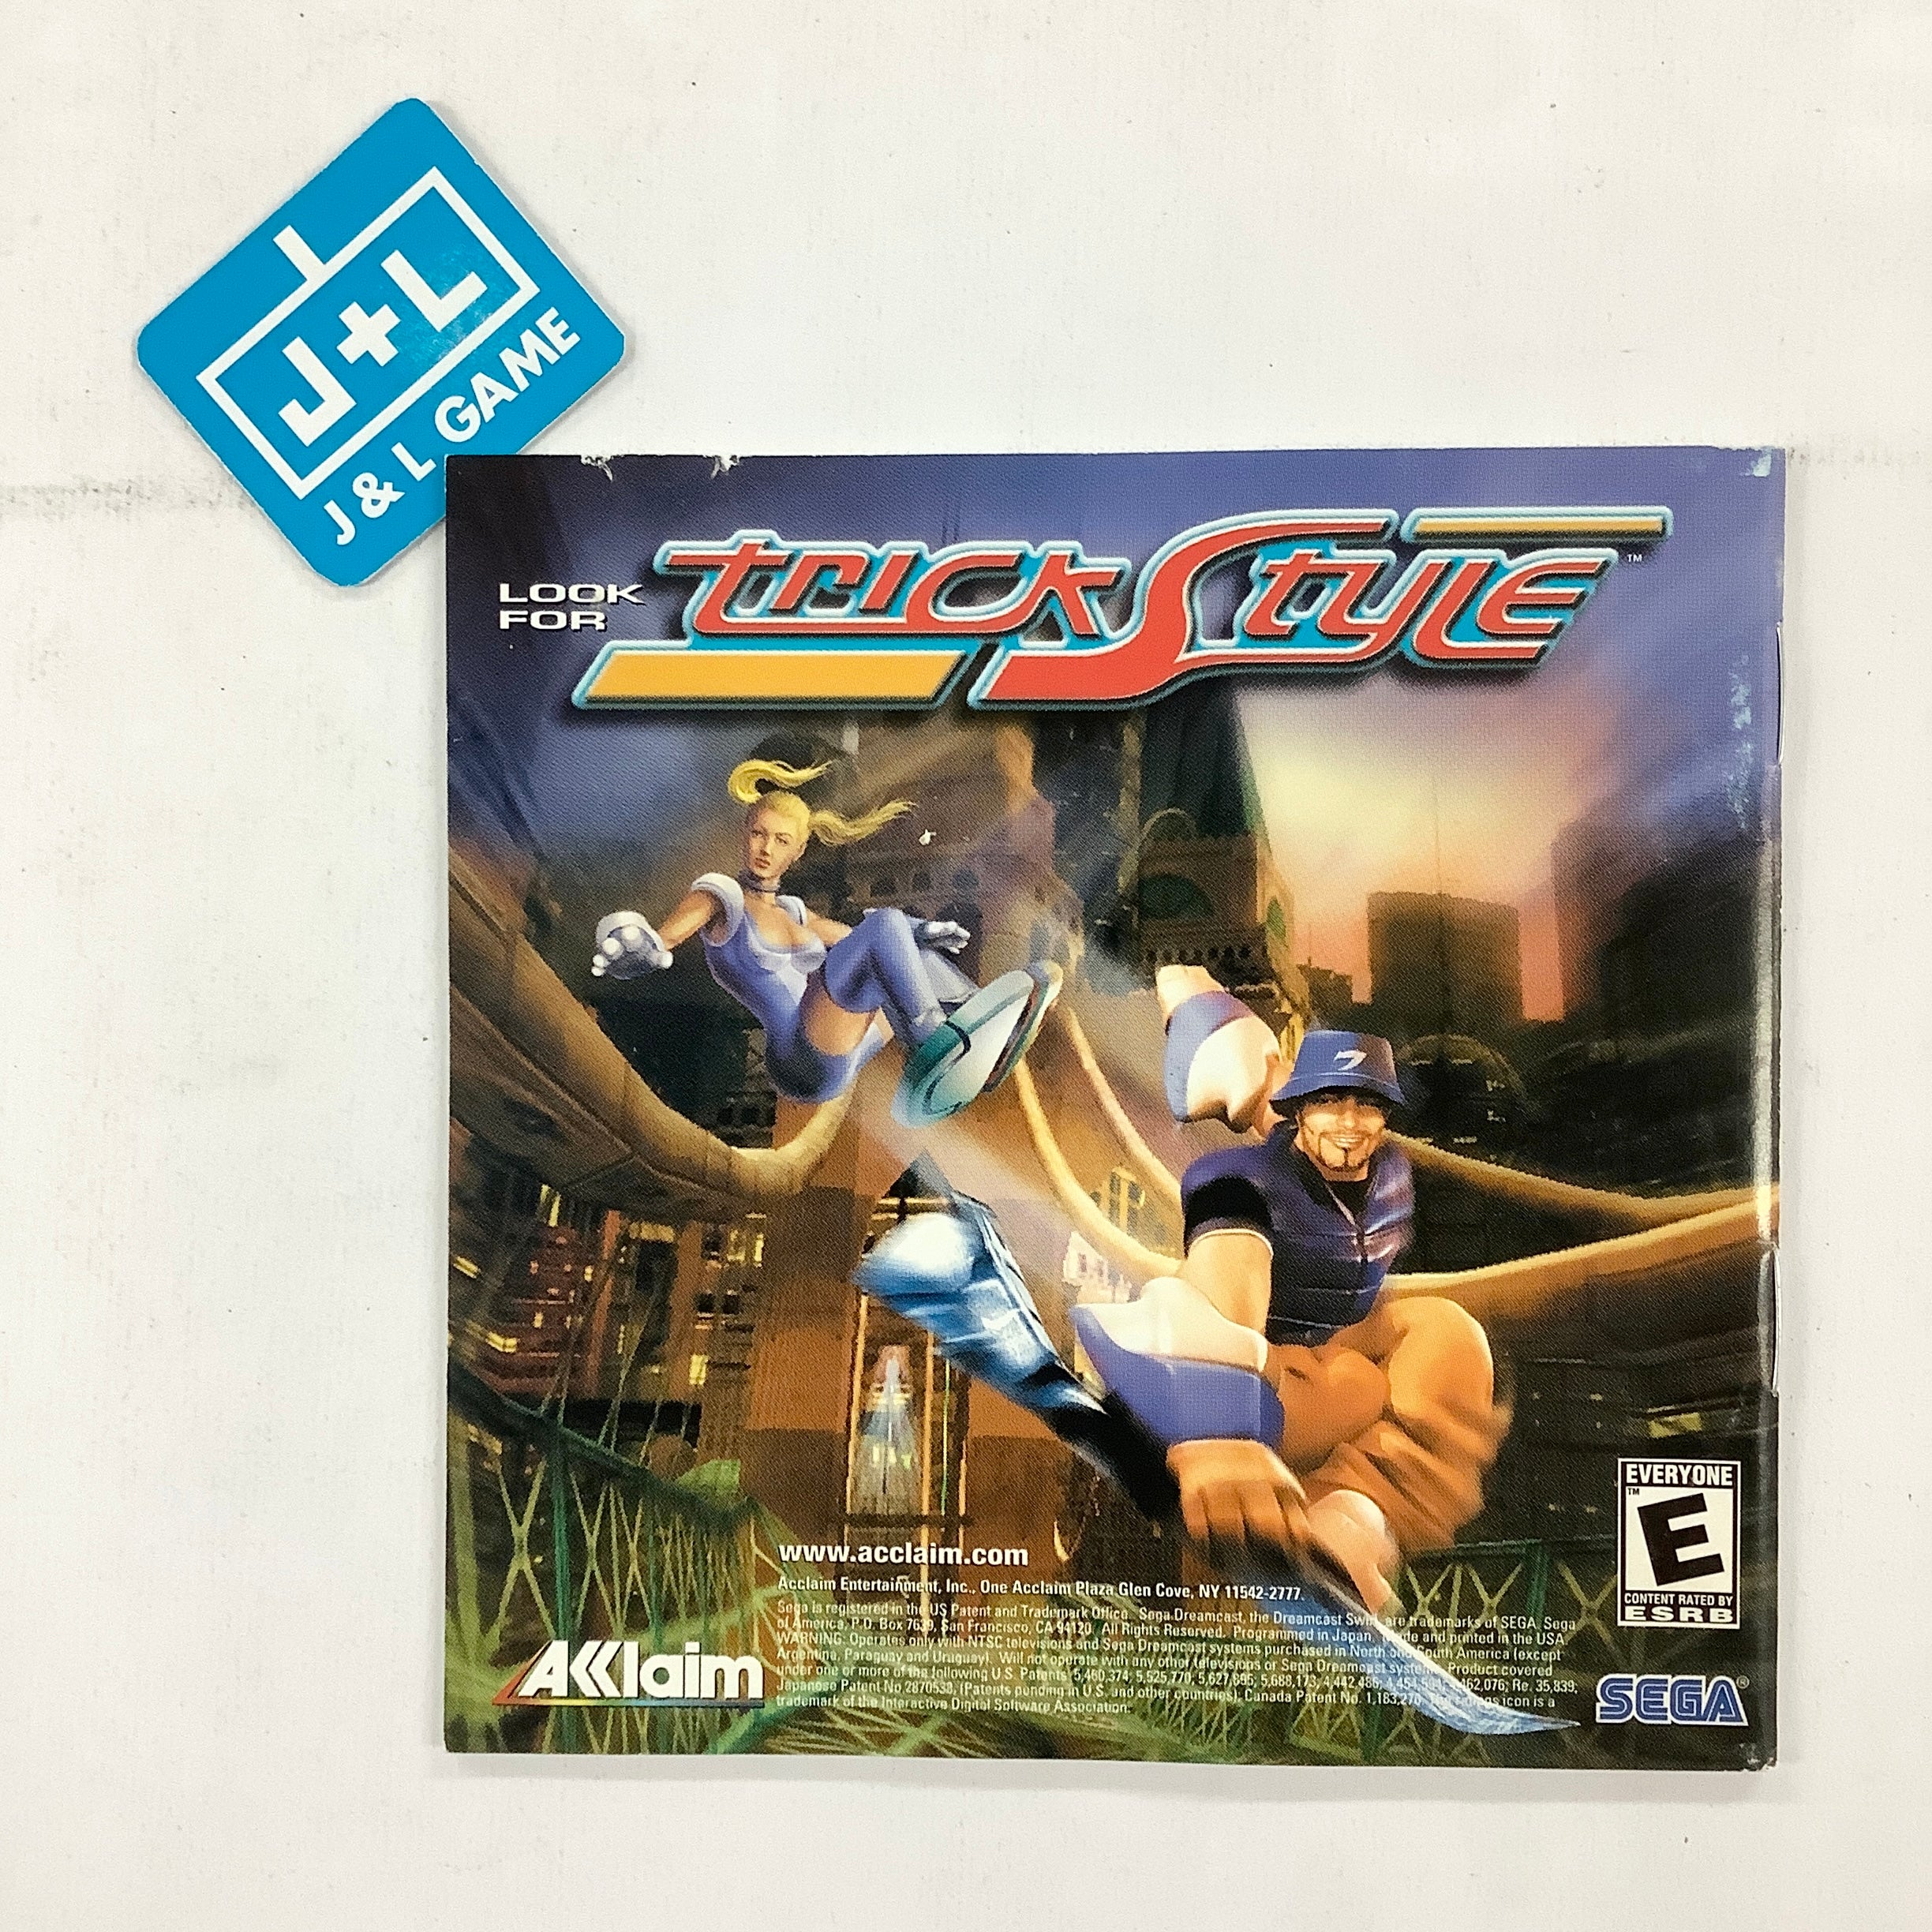 Re-Volt - (DC) SEGA Dreamcast  [Pre-Owned] Video Games Acclaim   